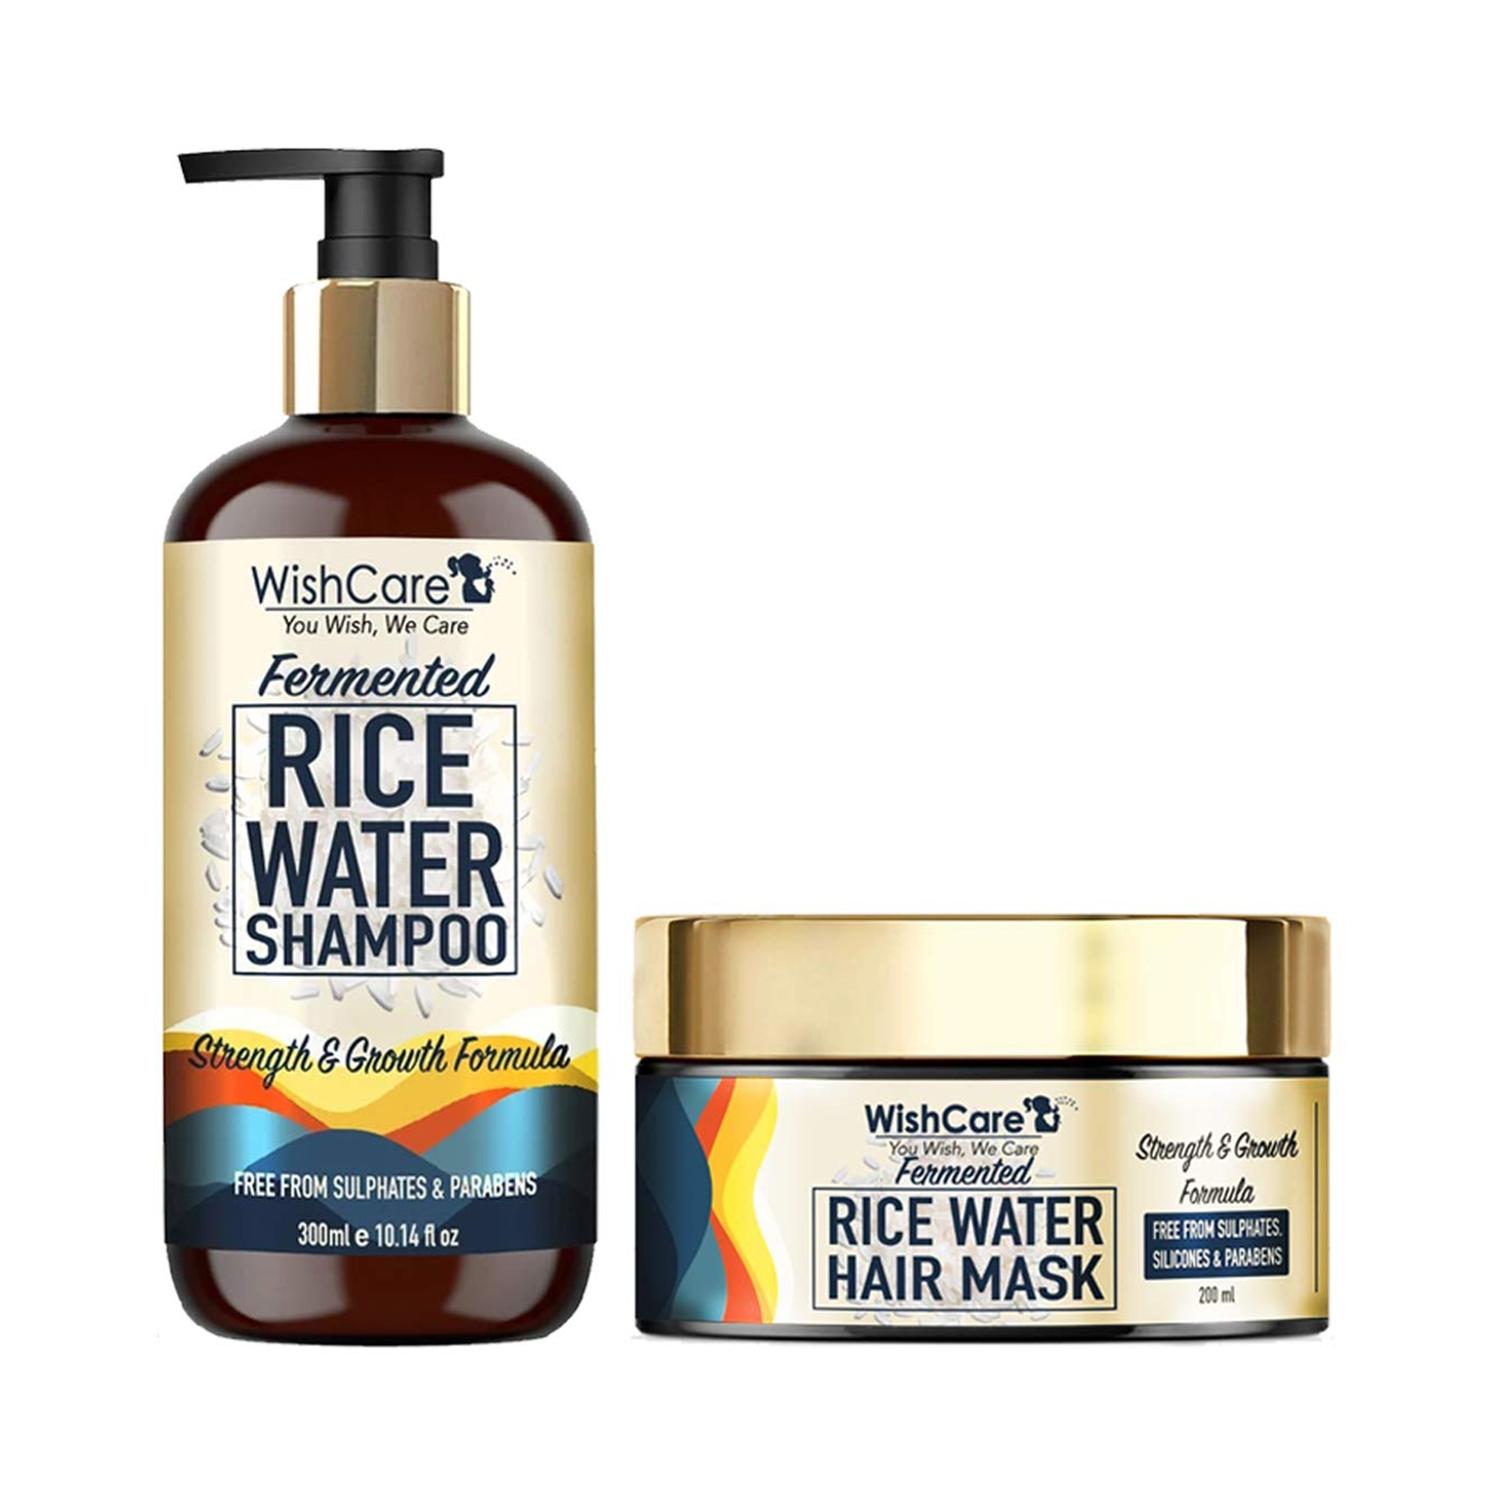 WishCare | WishCare Strength & Growth Formula Fermented Rice Water Shampoo & Hair Mask Combo